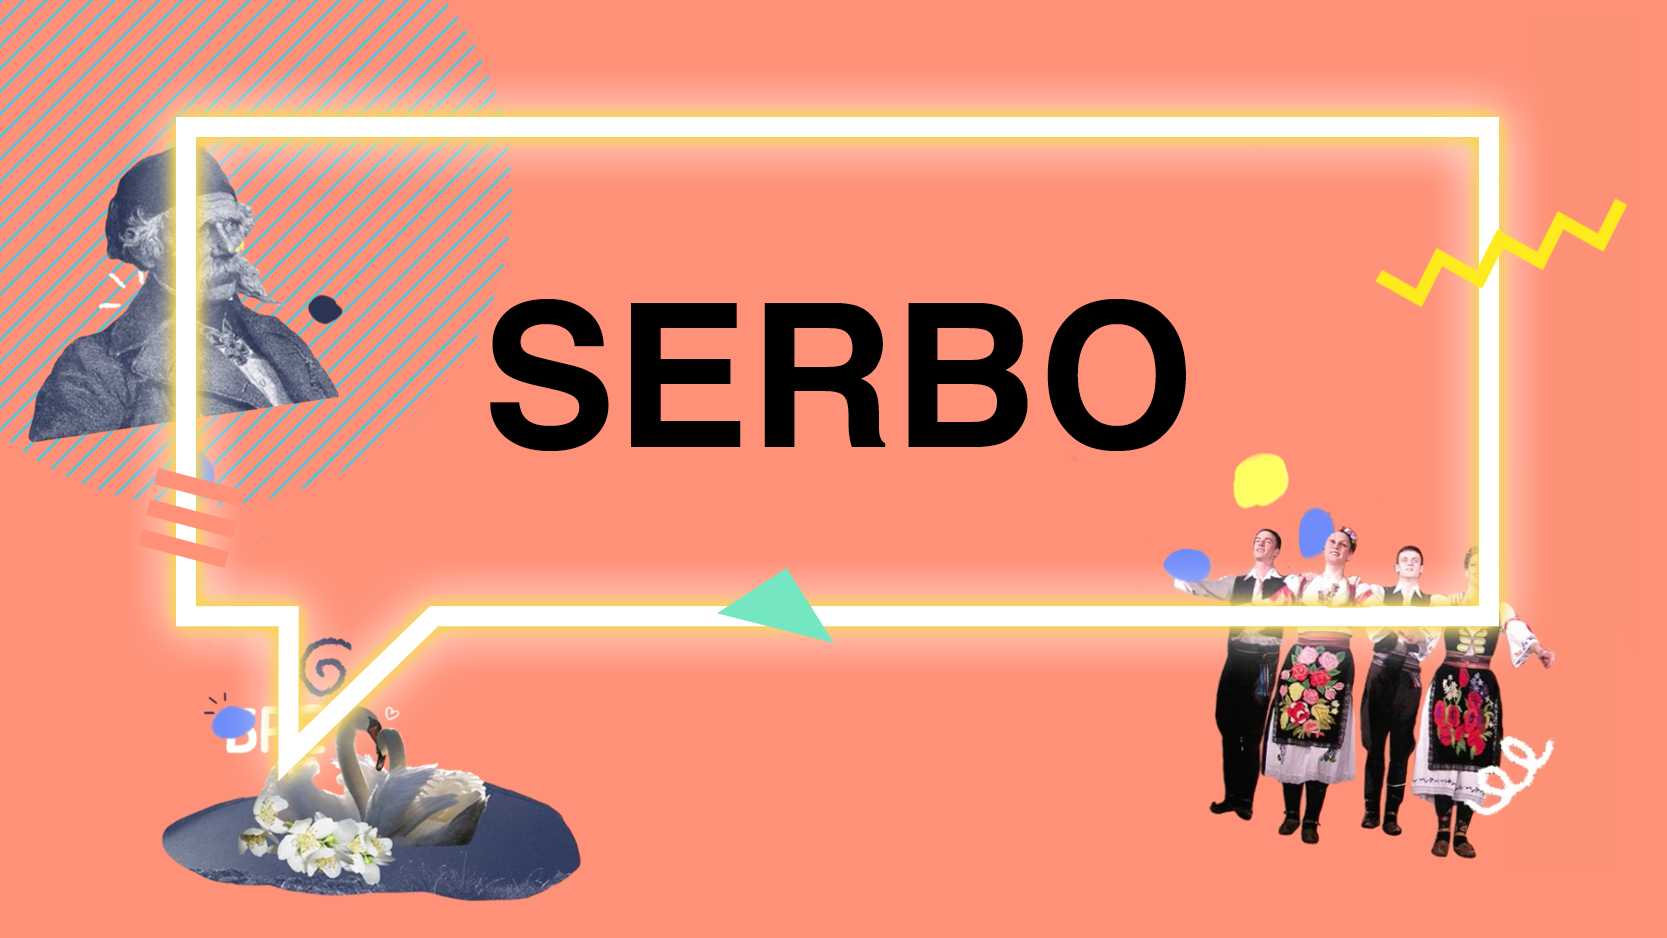 Serbo